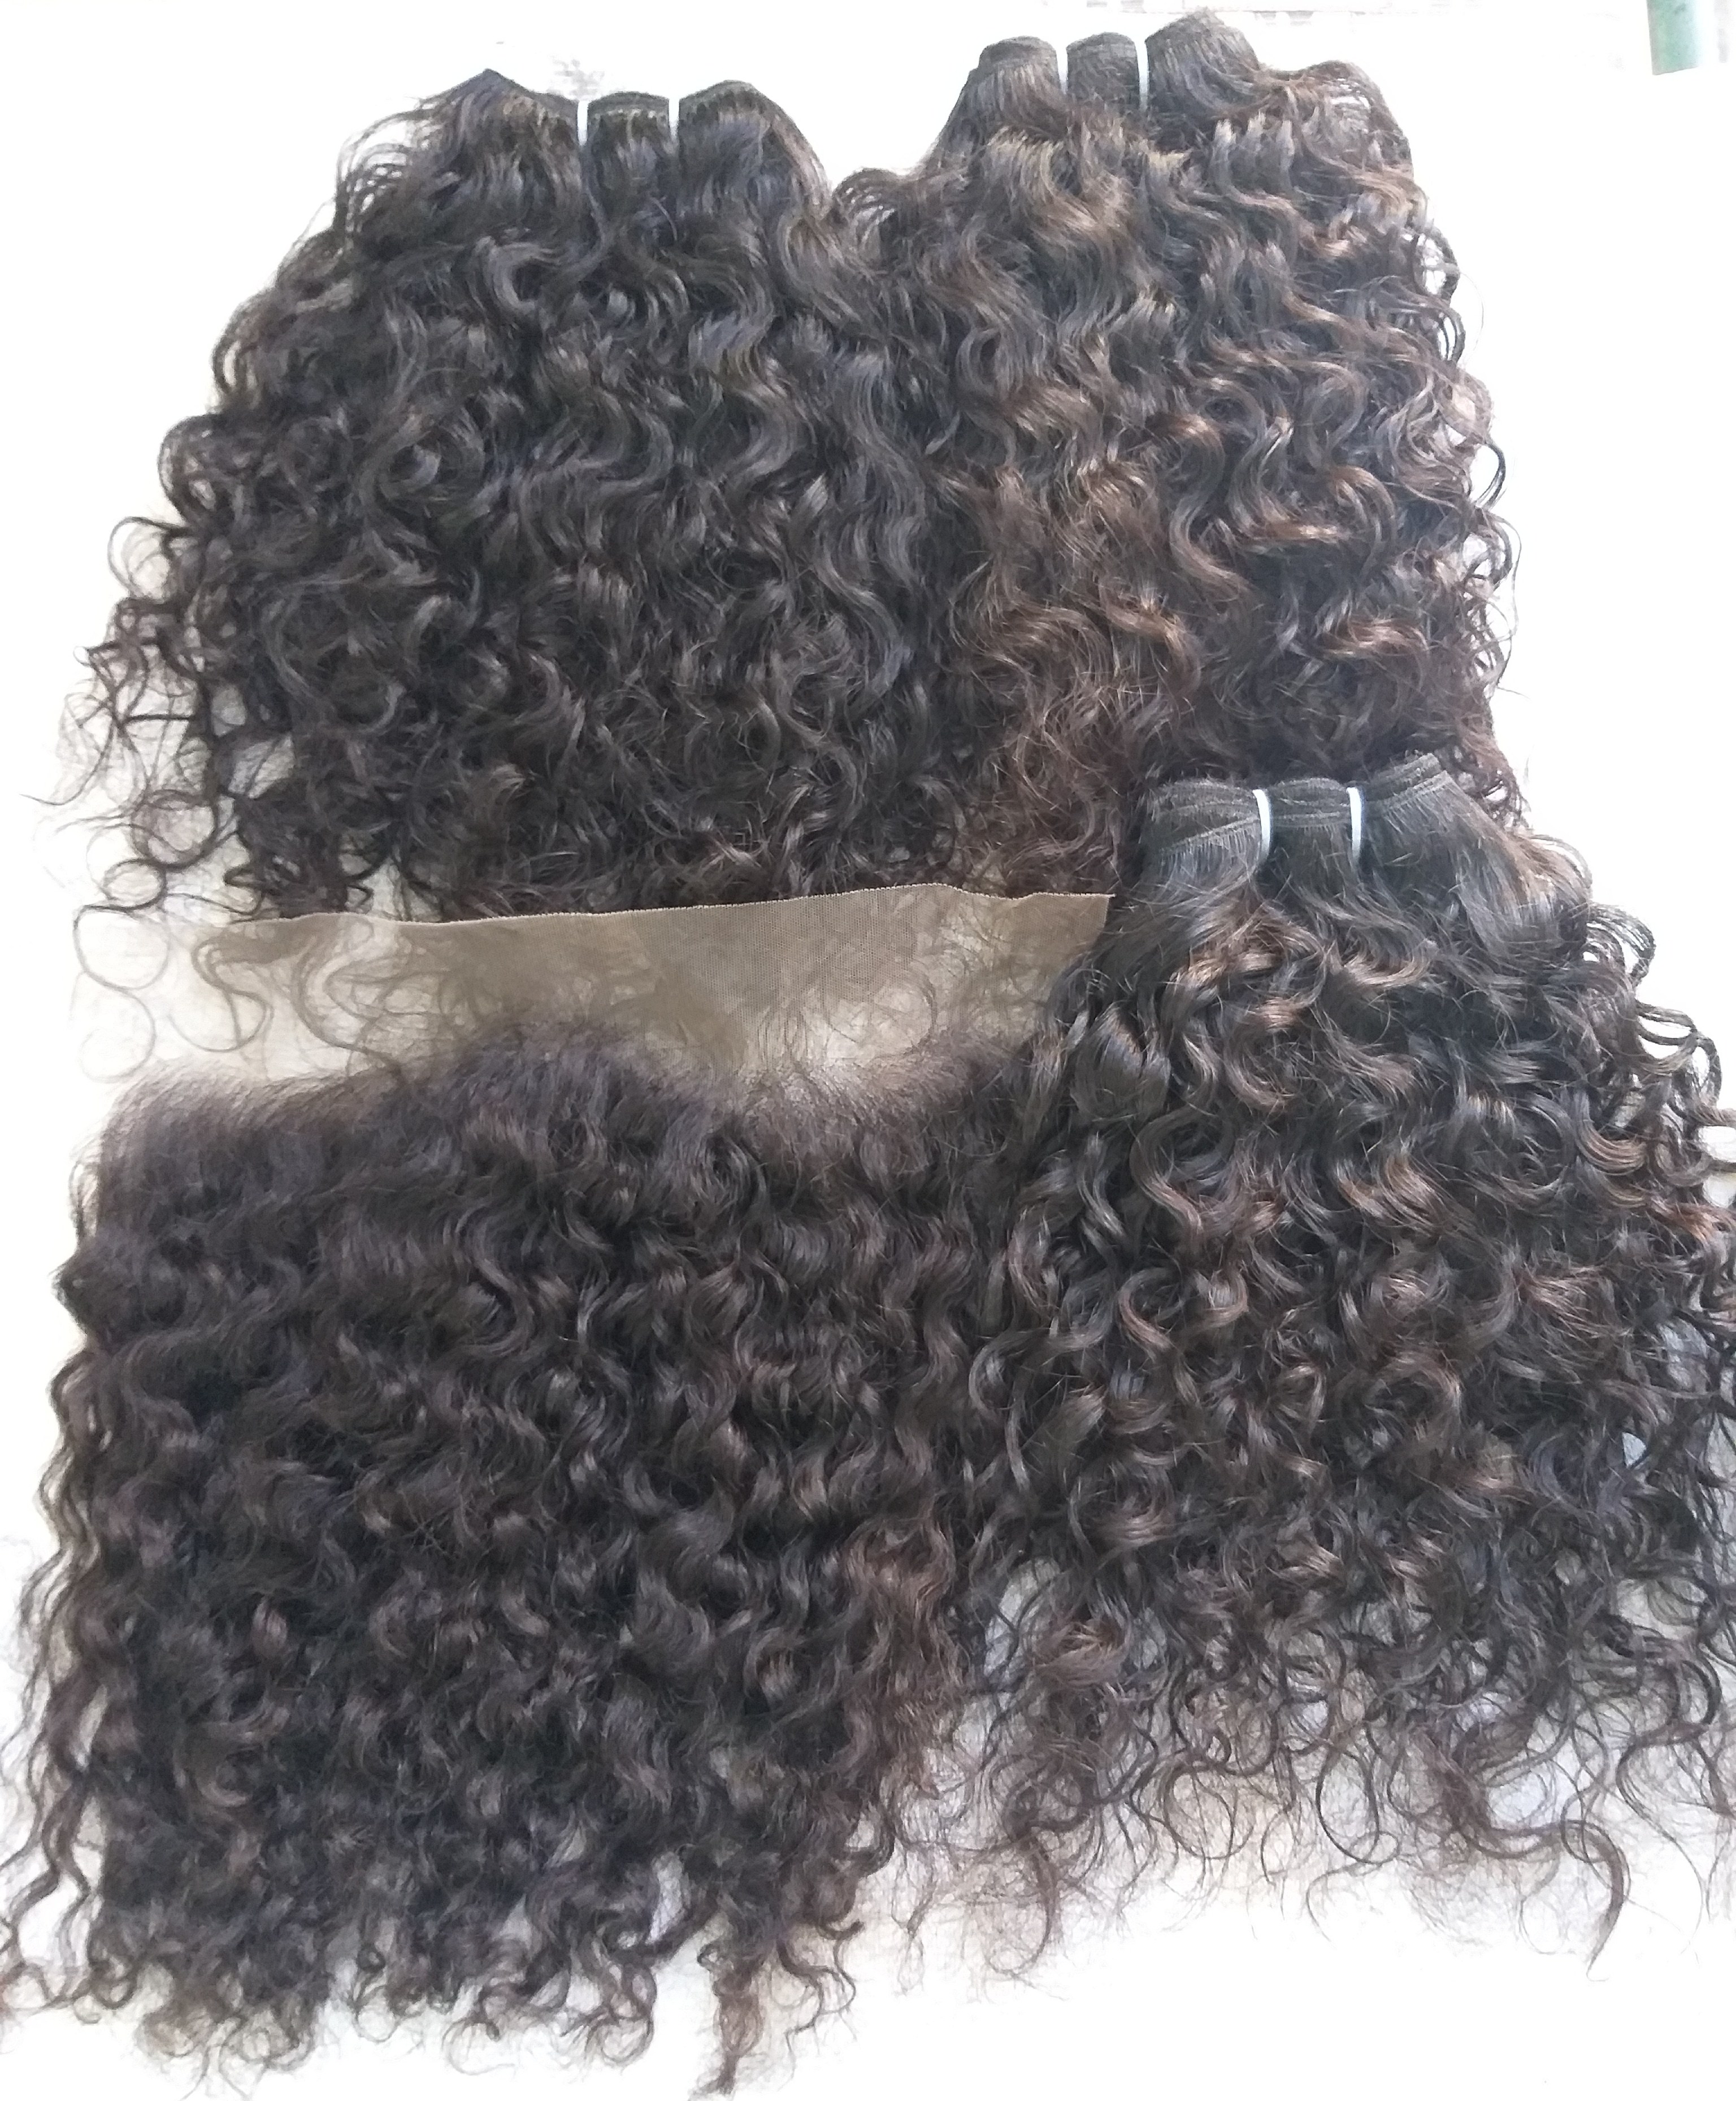 Raw Curly Human Hair